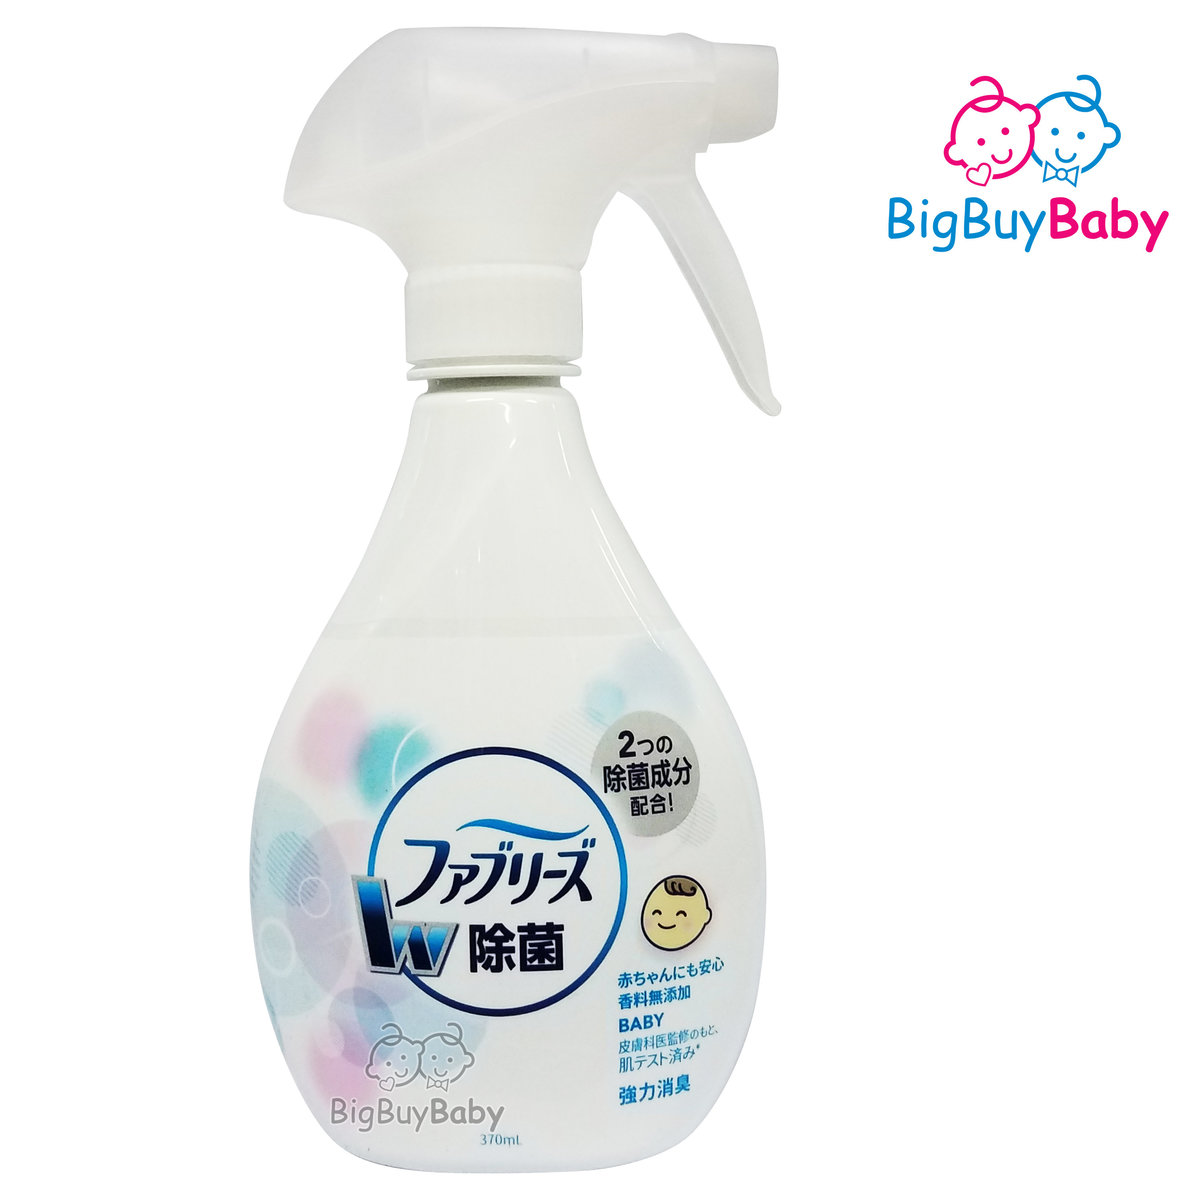 Febreze Fabric Refresher No Fragrance Baby Use 370ml 5294 Hktvmall The Largest Hk Shopping Platform